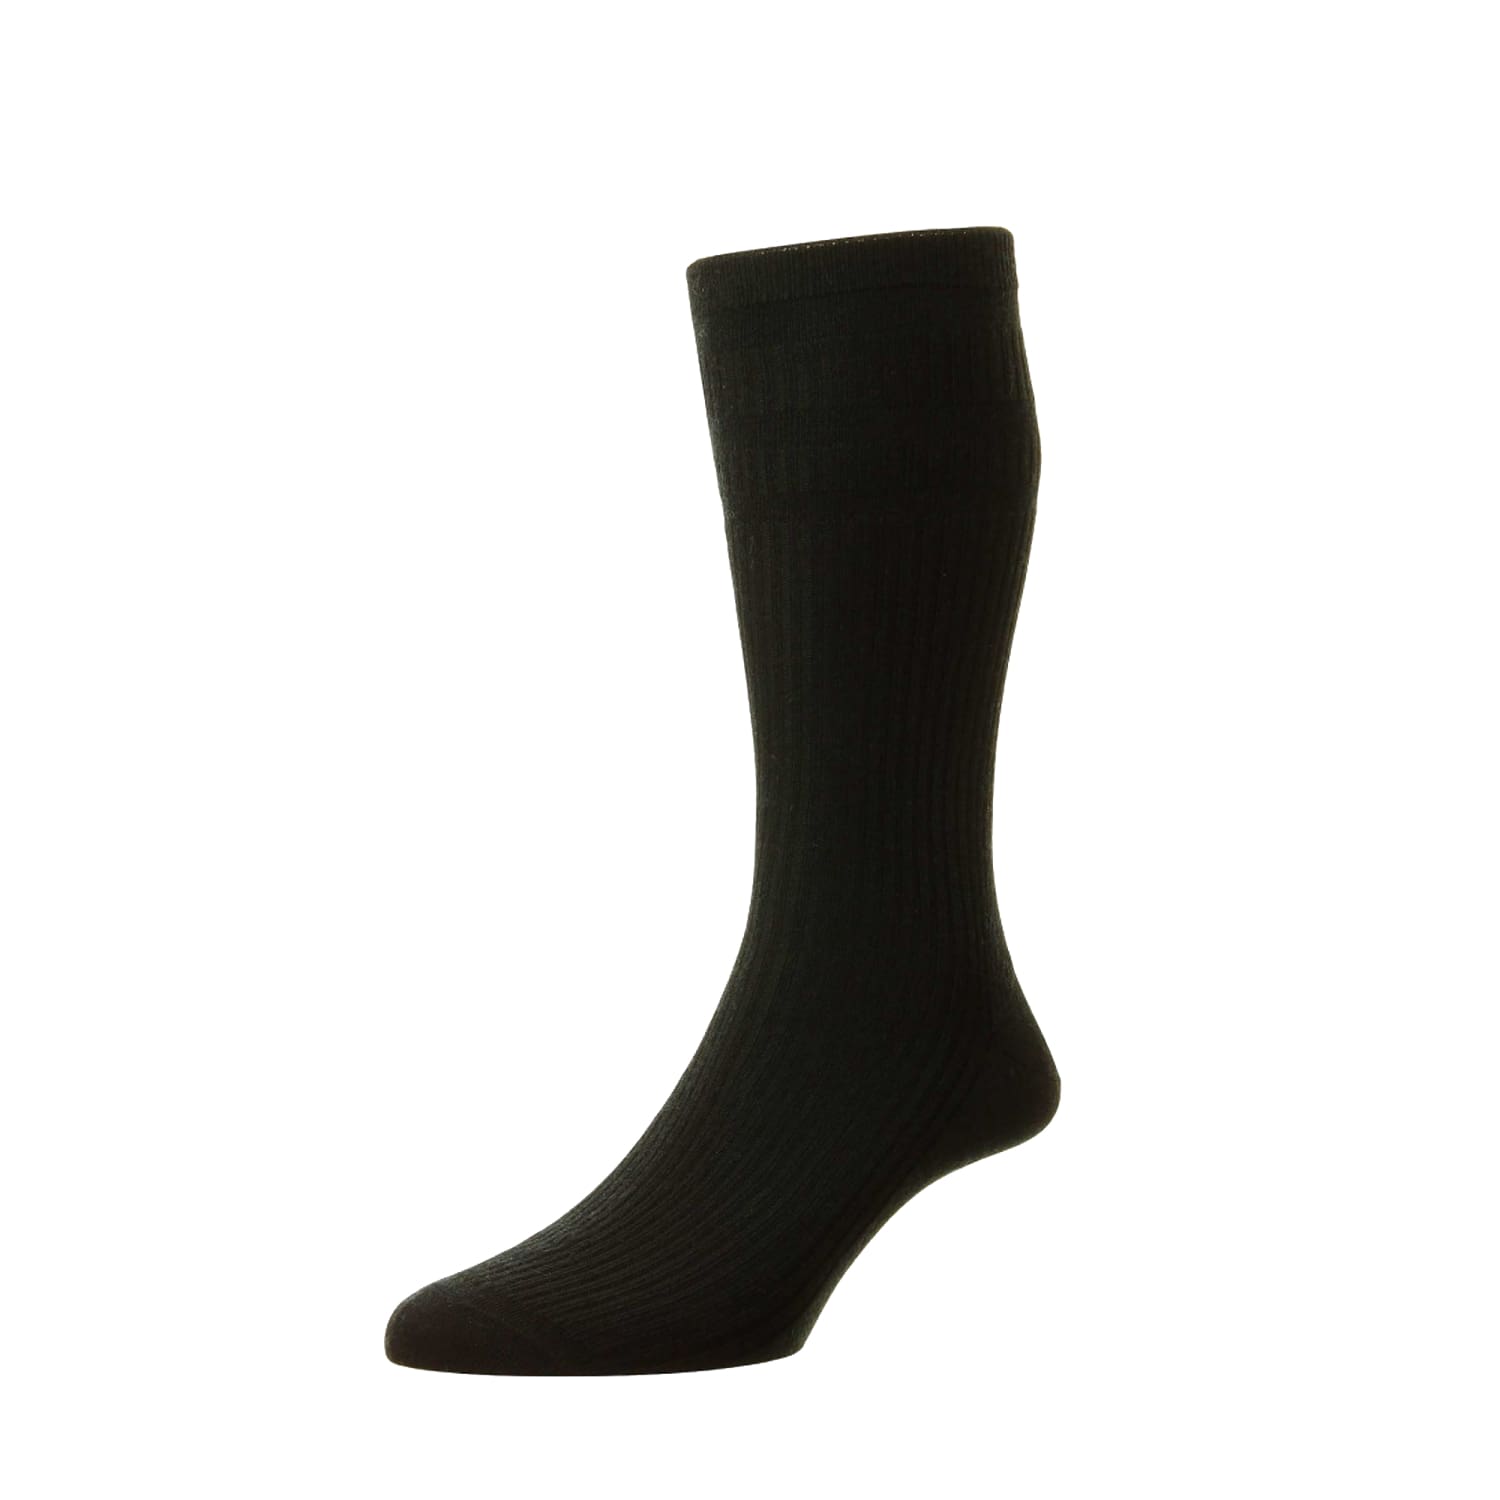 HJ Extra Wide Softop Socks - HJ191H - Cotton - Black 1